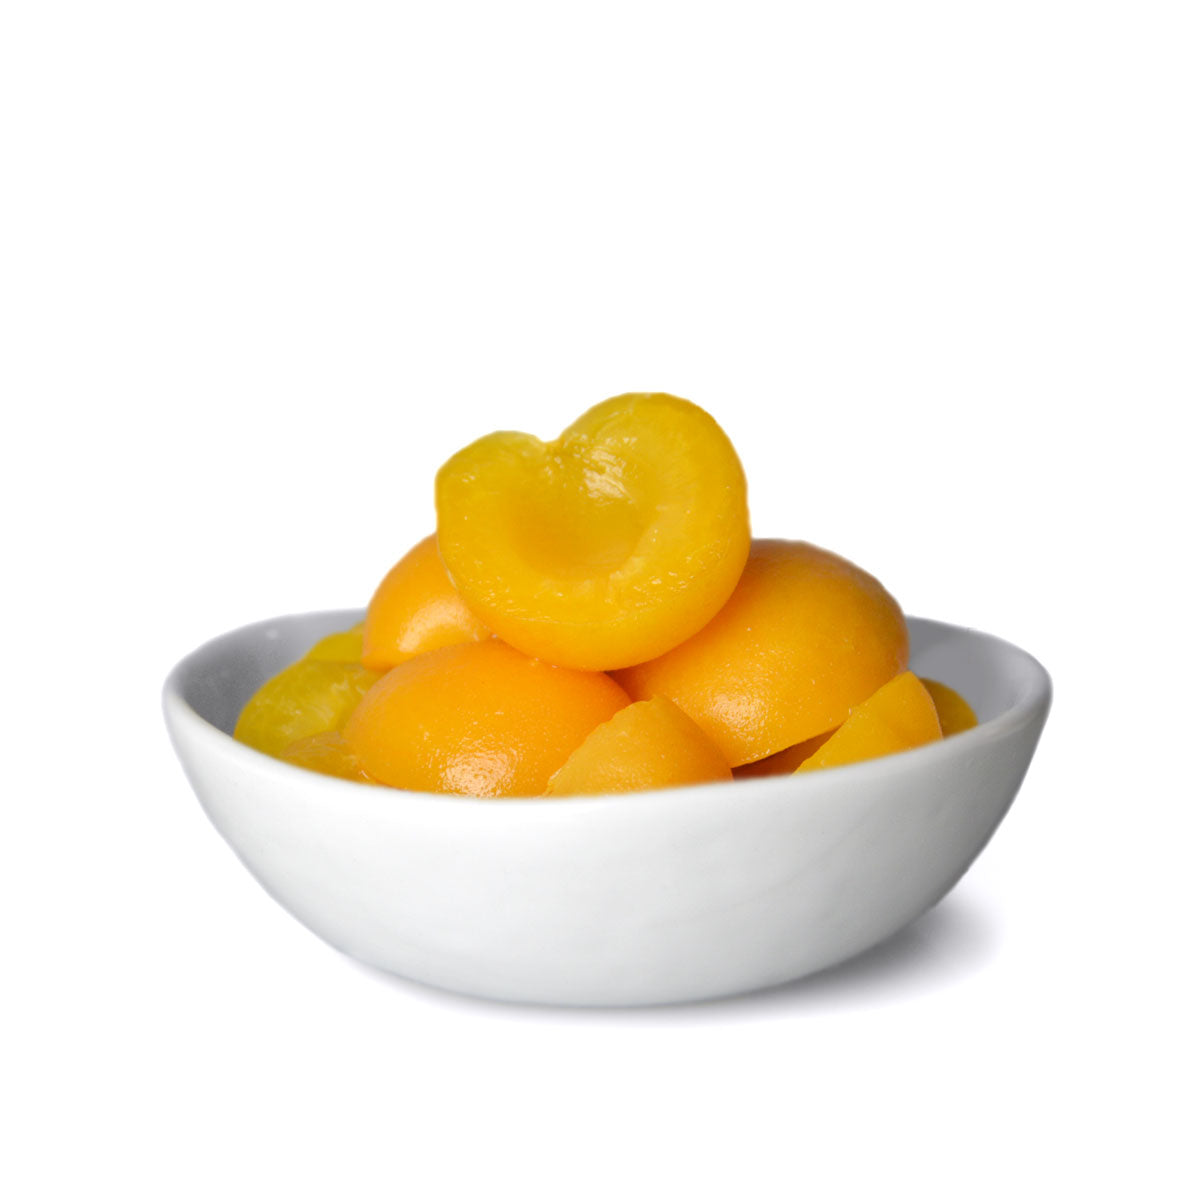 Apricot Halves in bowl